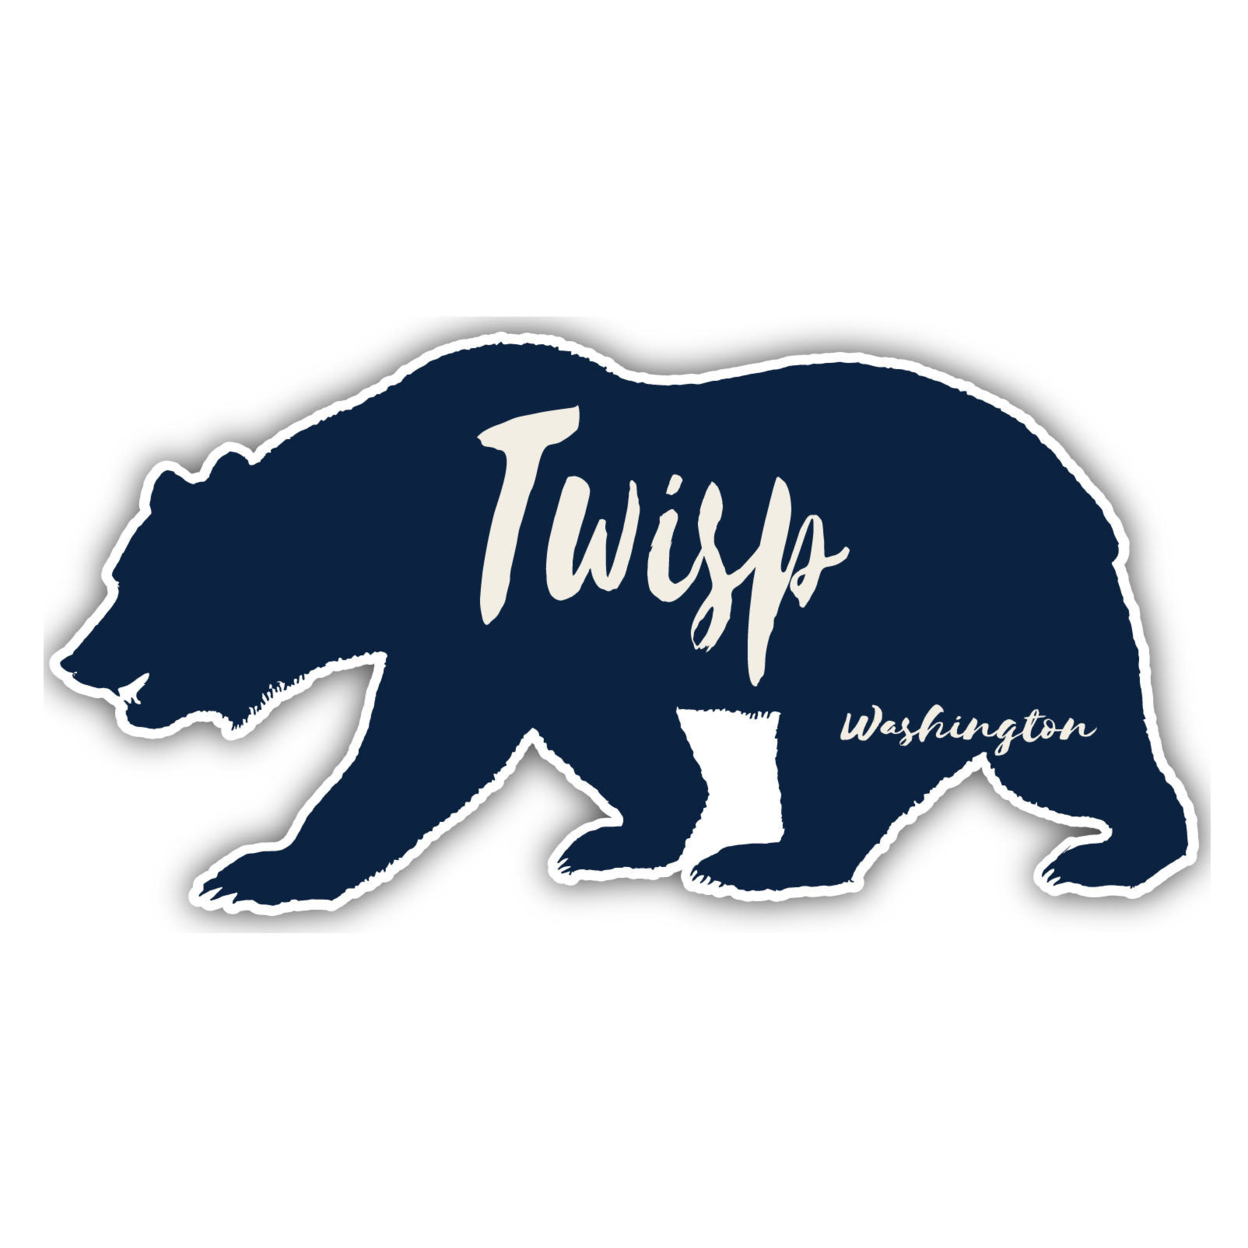 Twisp Washington Souvenir Decorative Stickers (Choose Theme And Size) - Single Unit, 4-Inch, Bear